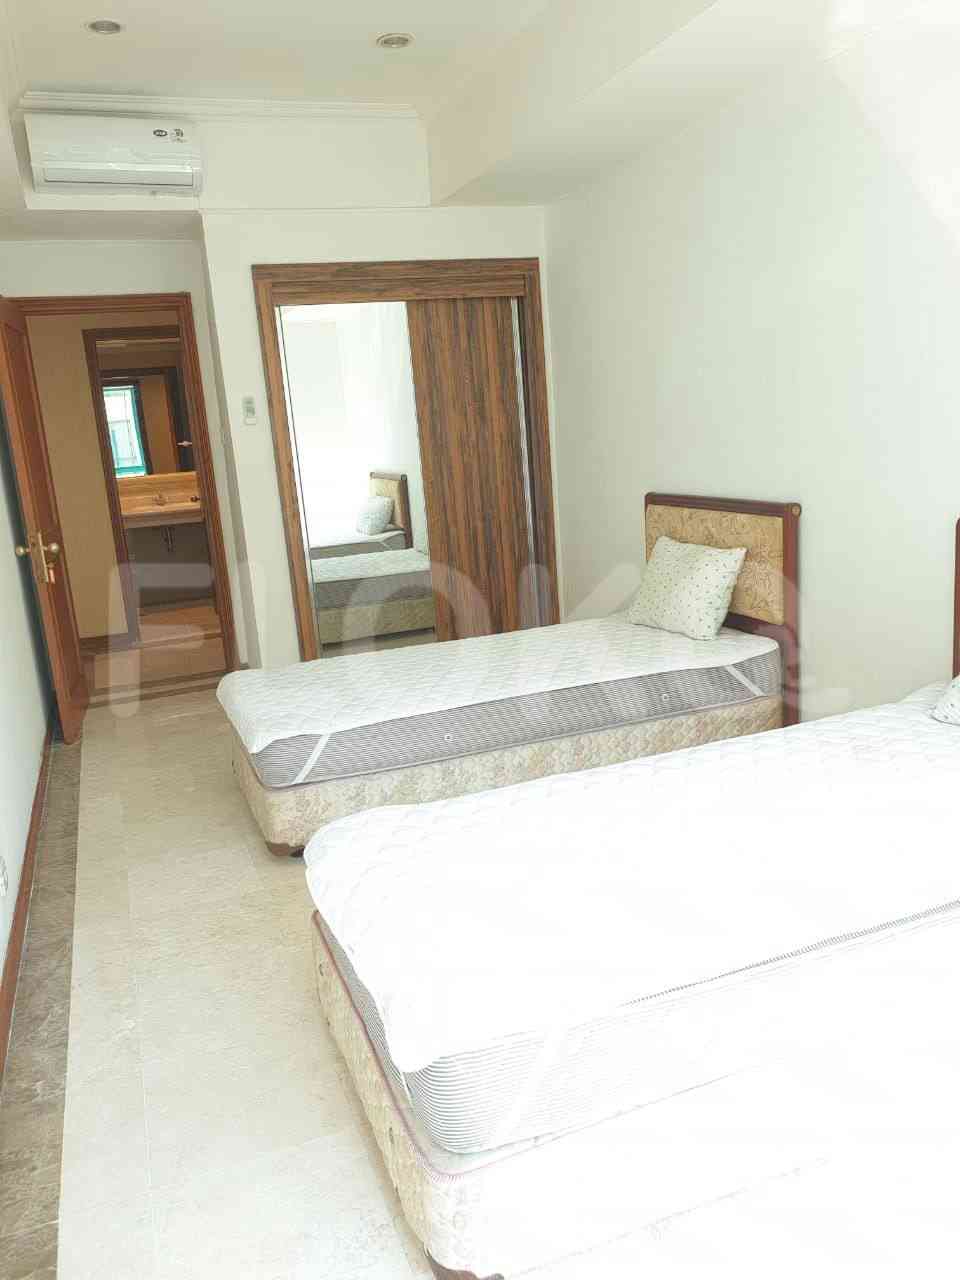 3 Bedroom on 15th Floor for Rent in Casablanca Apartment - ftebc2 1